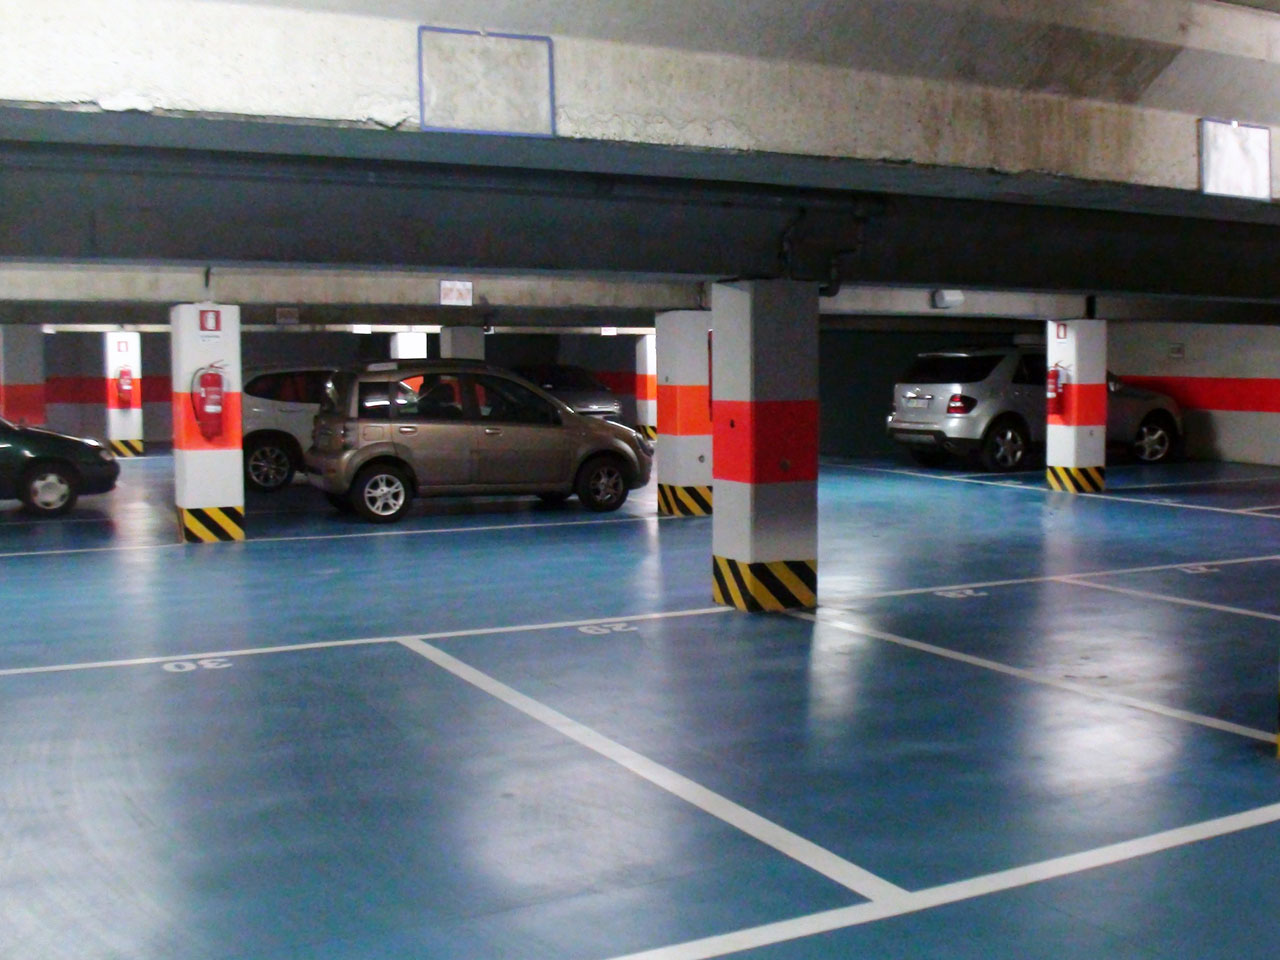 Indoor parking lots to rent in the garage at the first basement floor - Atlantic Business Center - Milan